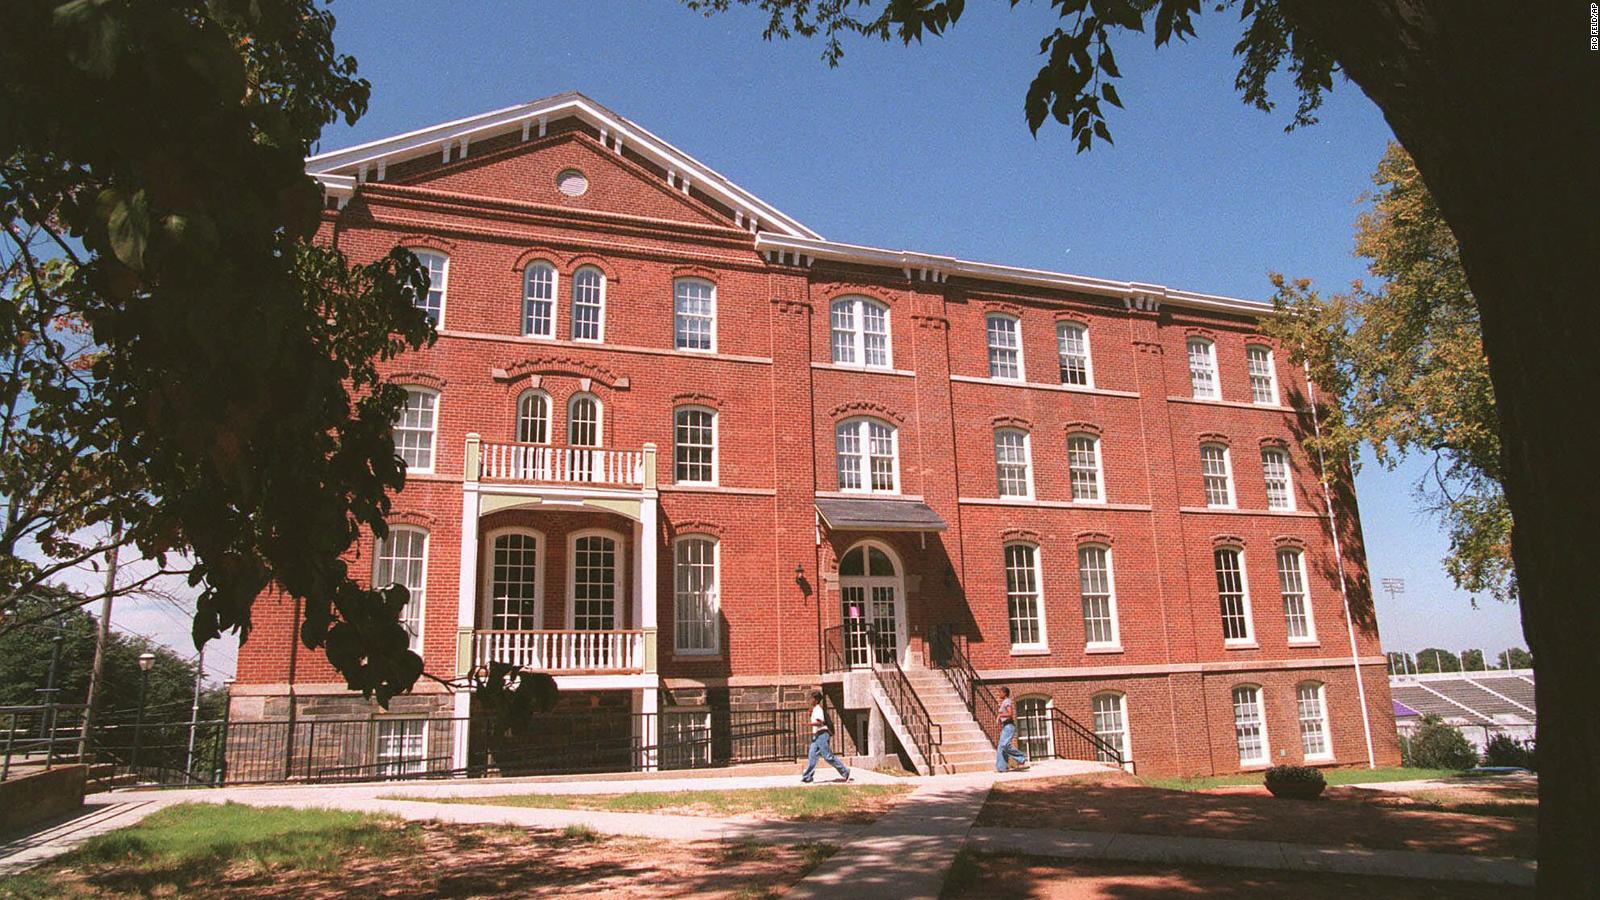 Atlanta HBCU Morris Brown College has accreditation restored after 20